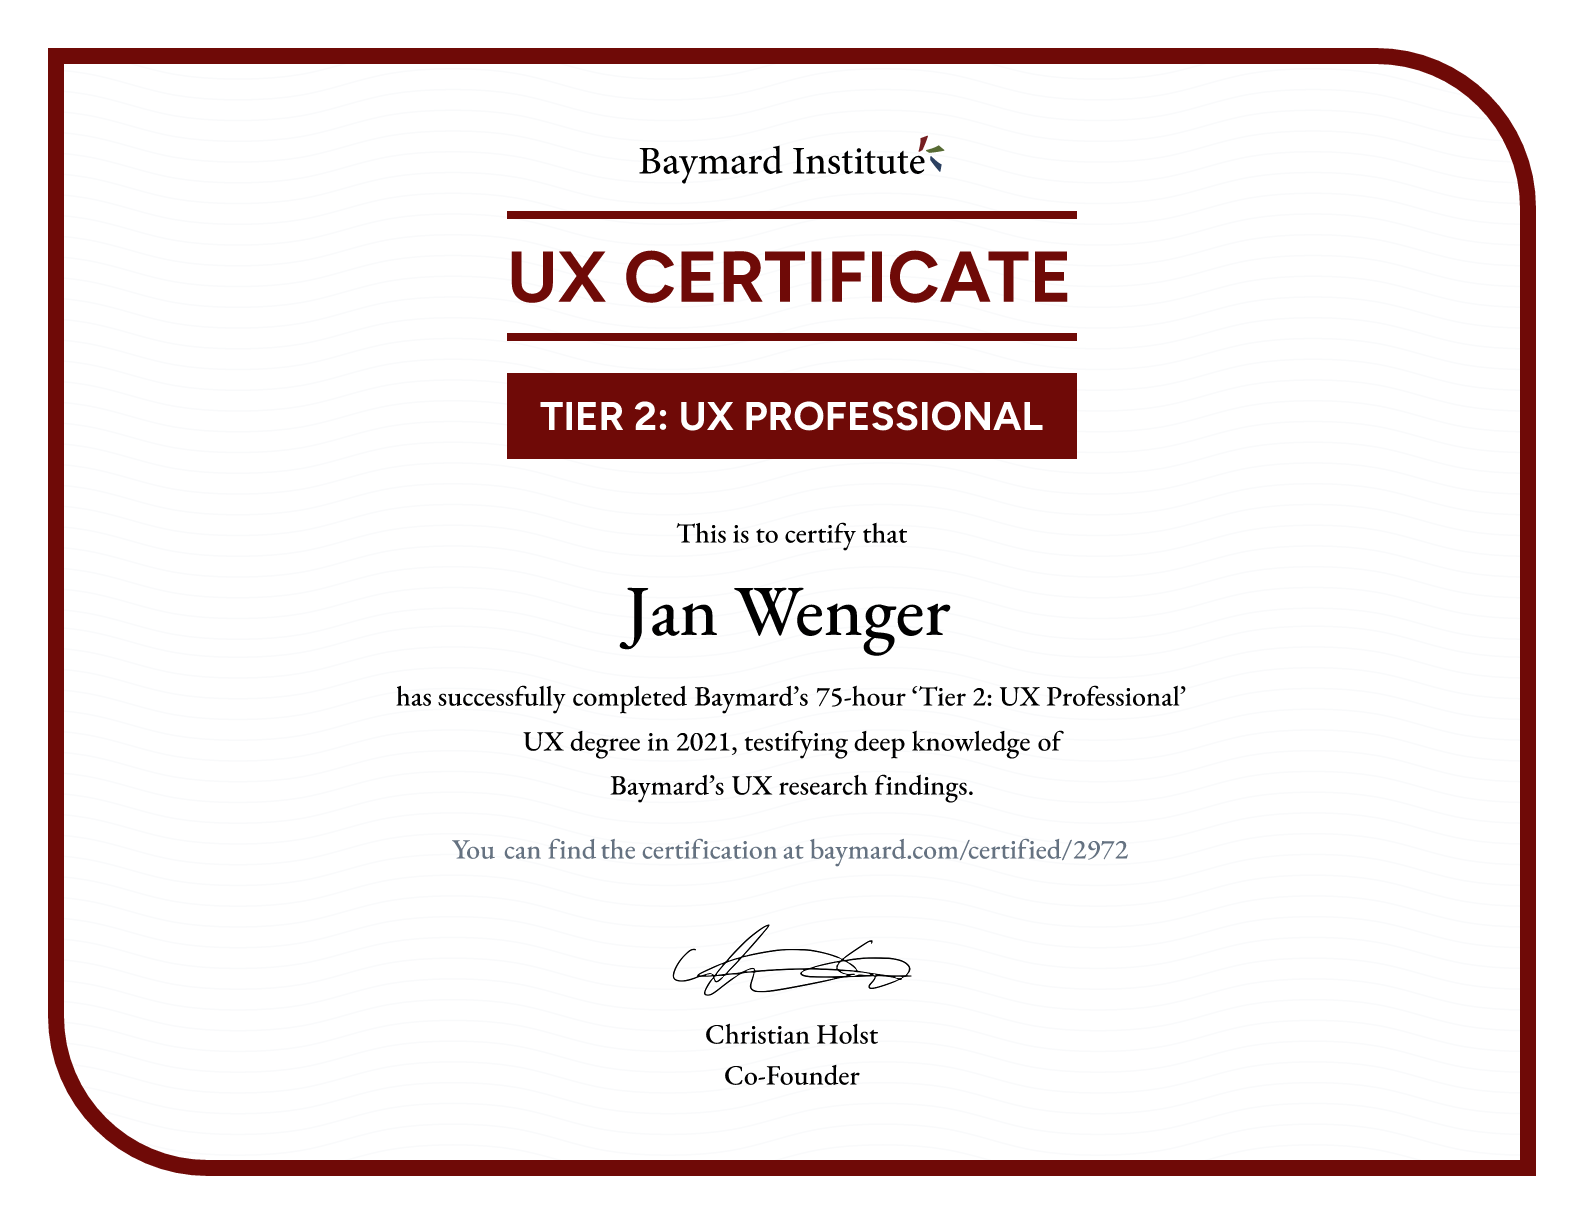 Jan Wenger’s certificate